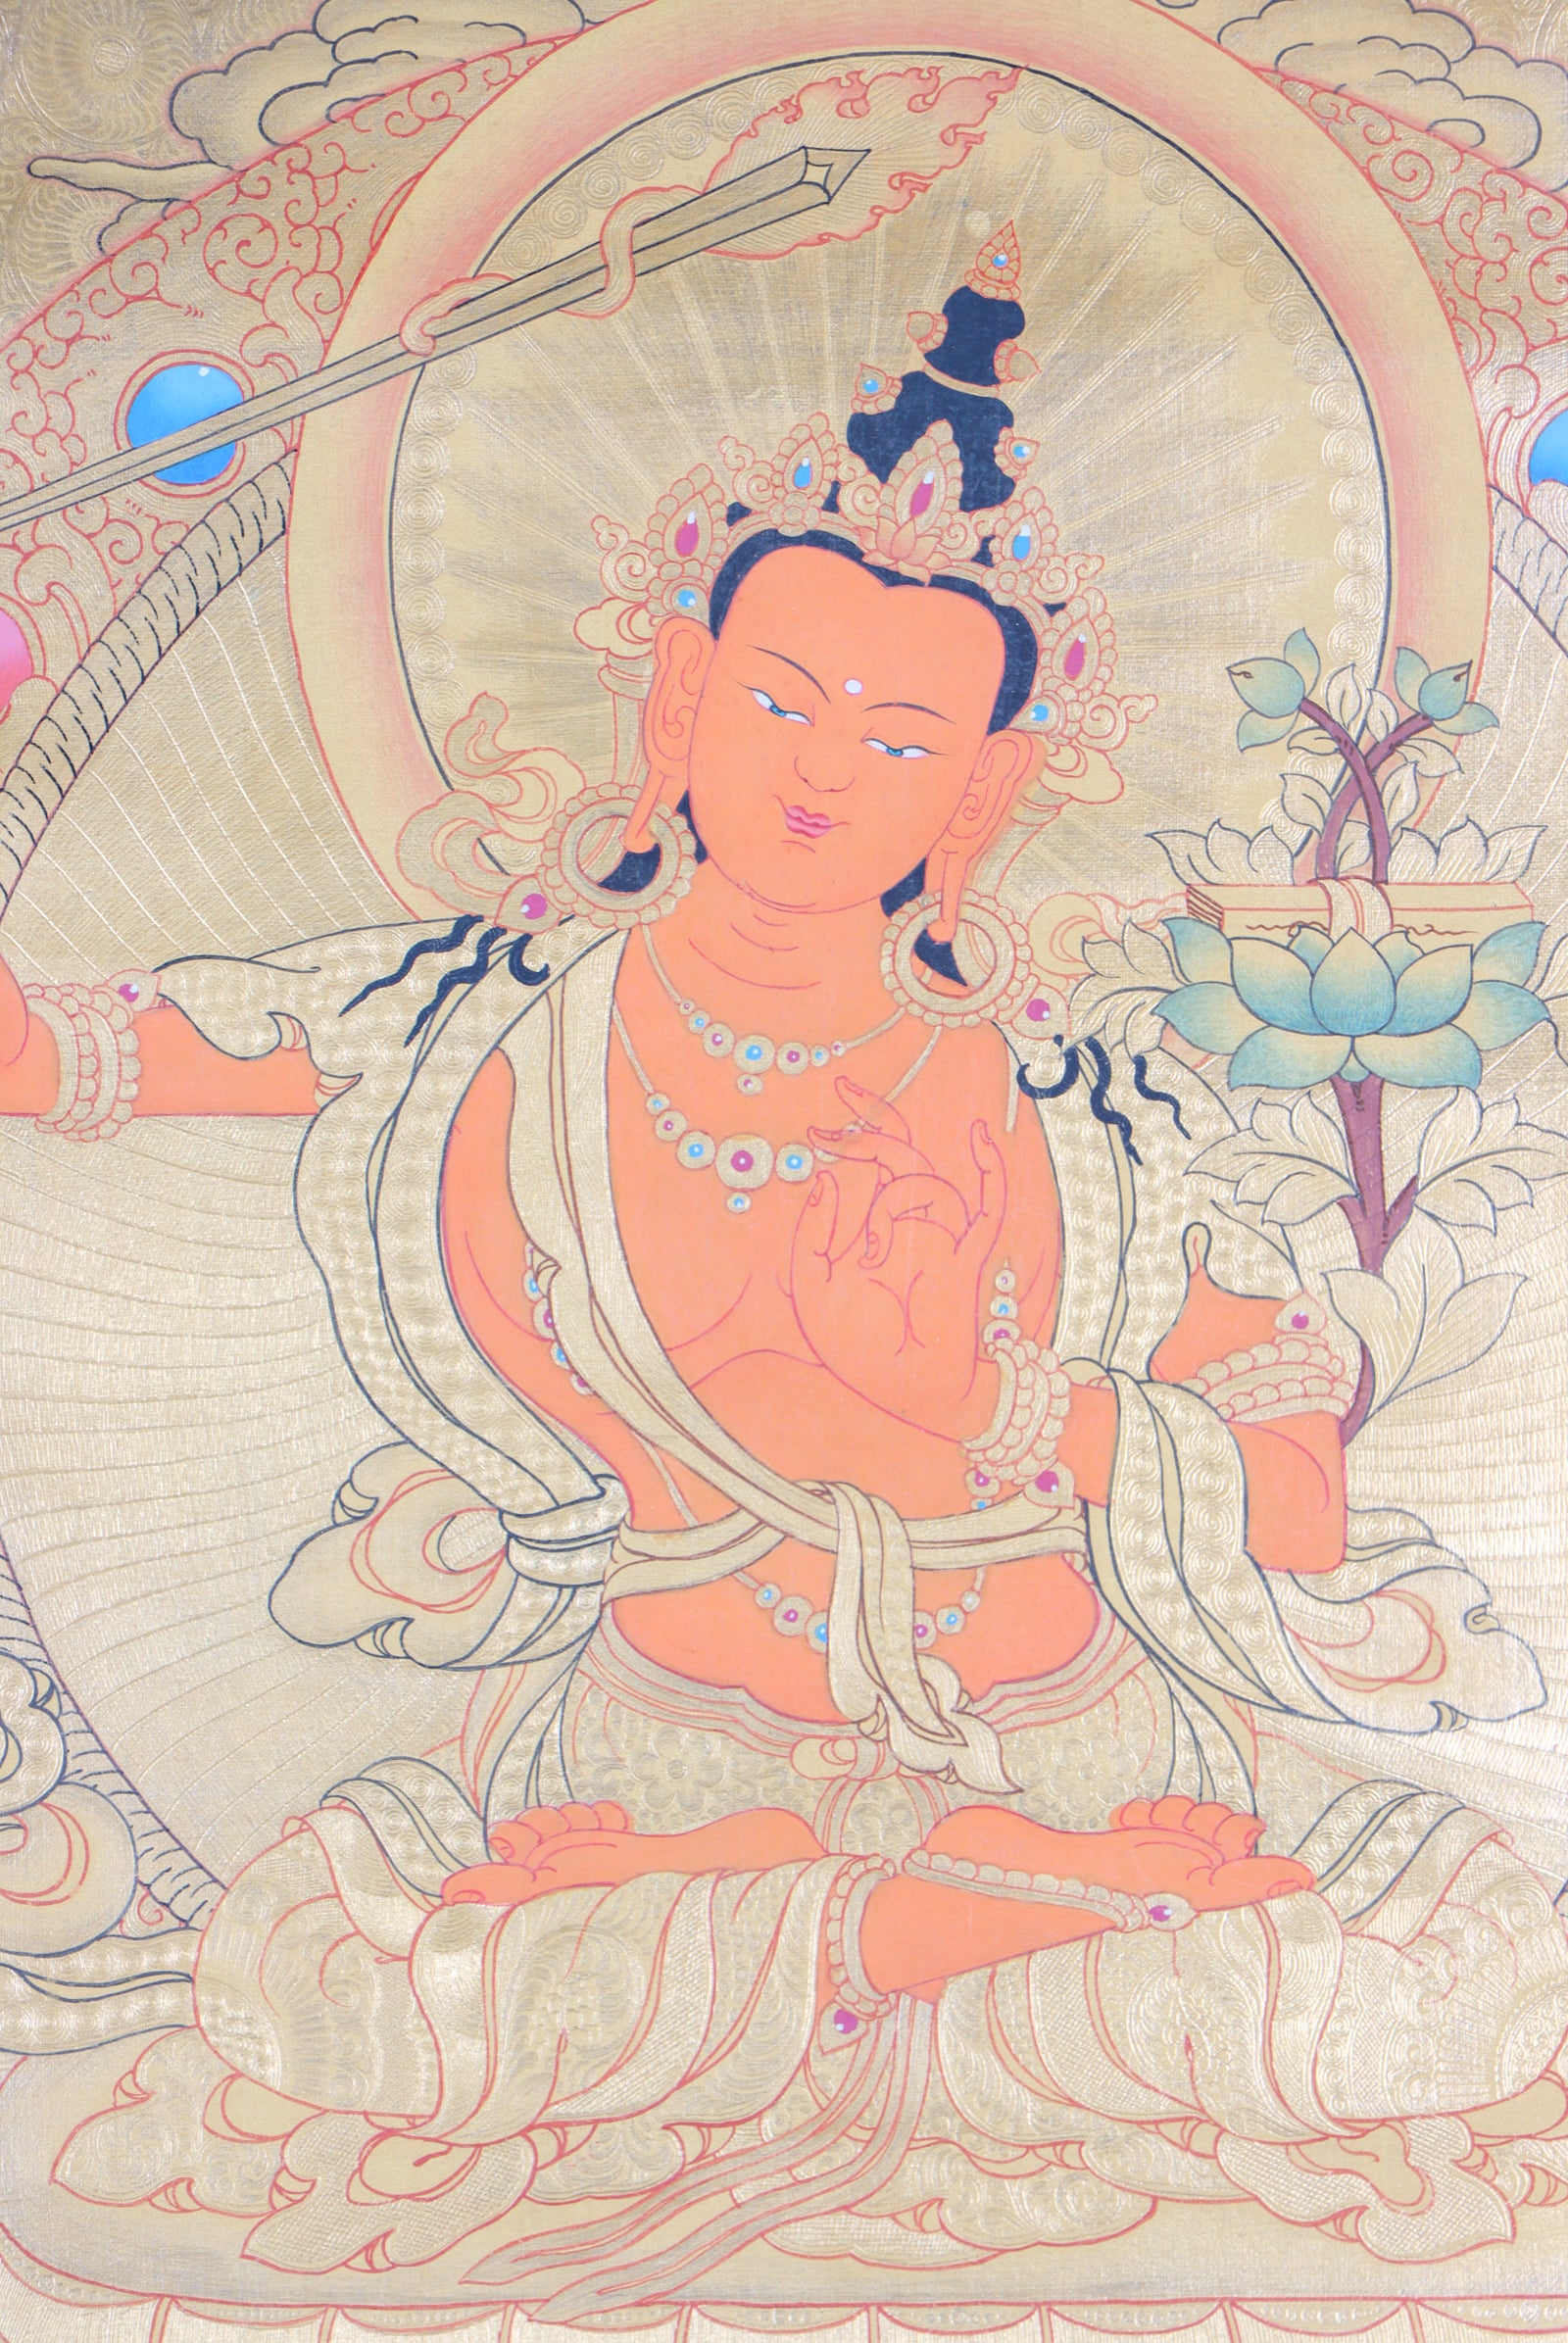 Manjushri Thangka Painting for knowledge and wisdom.